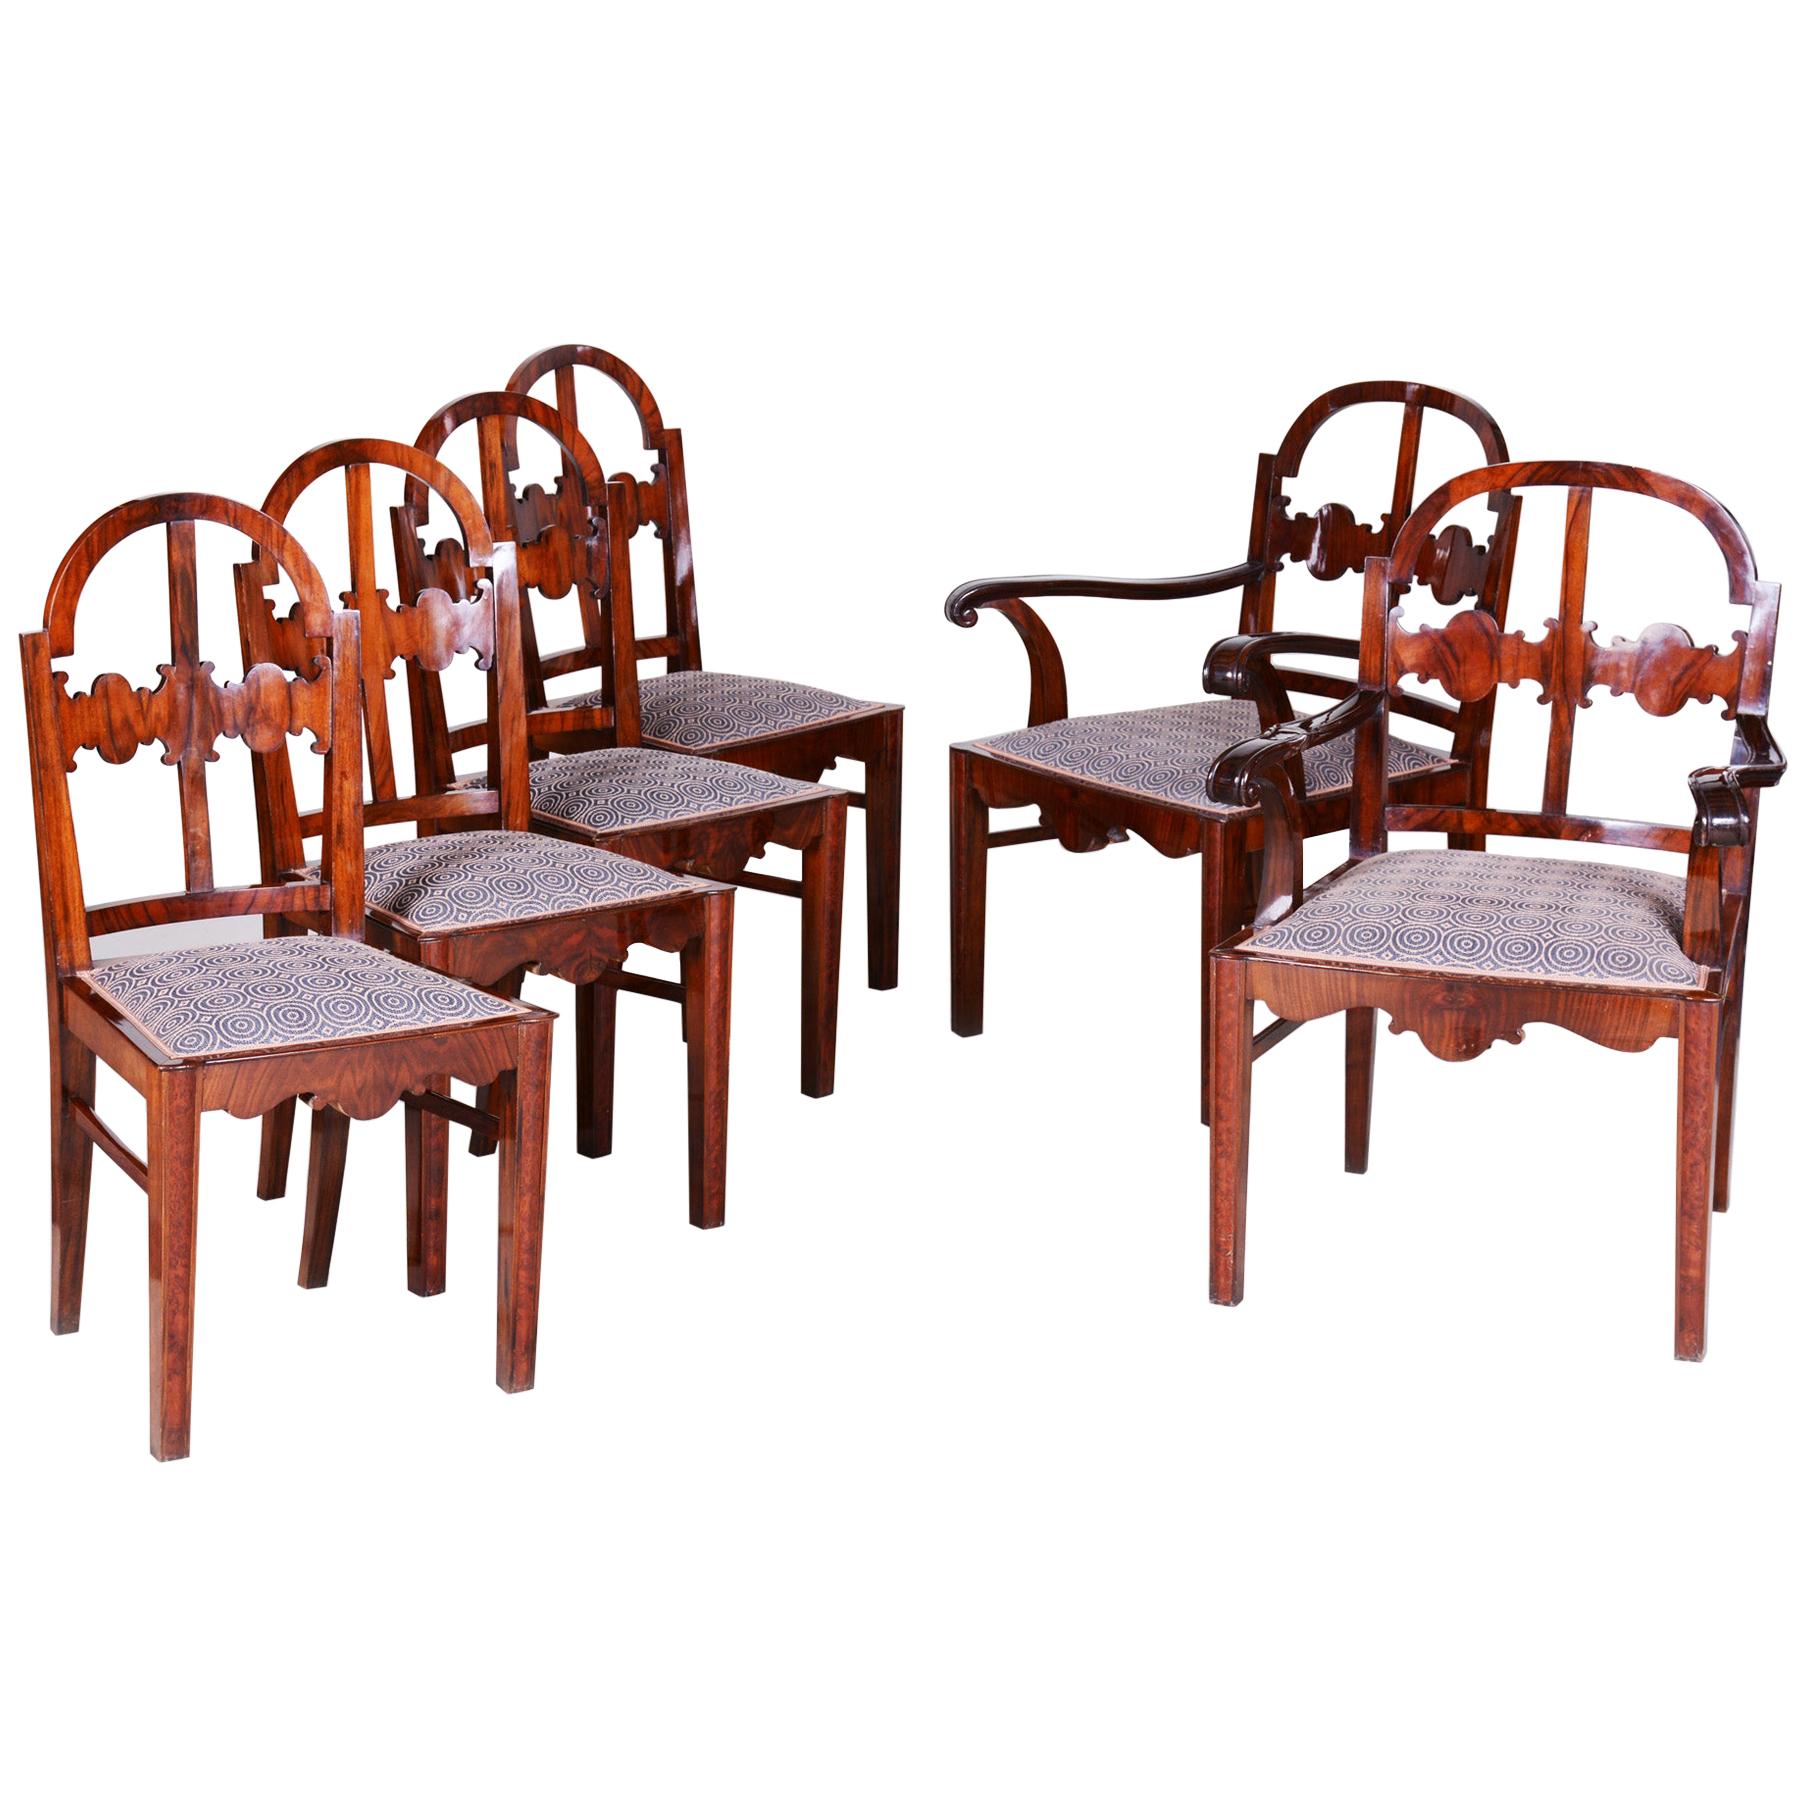 Art-déco-Sessel-Set aus Nussbaumholz, 2 Sessel und 4 Stühle, Shellac Polish, 1920er Jahre